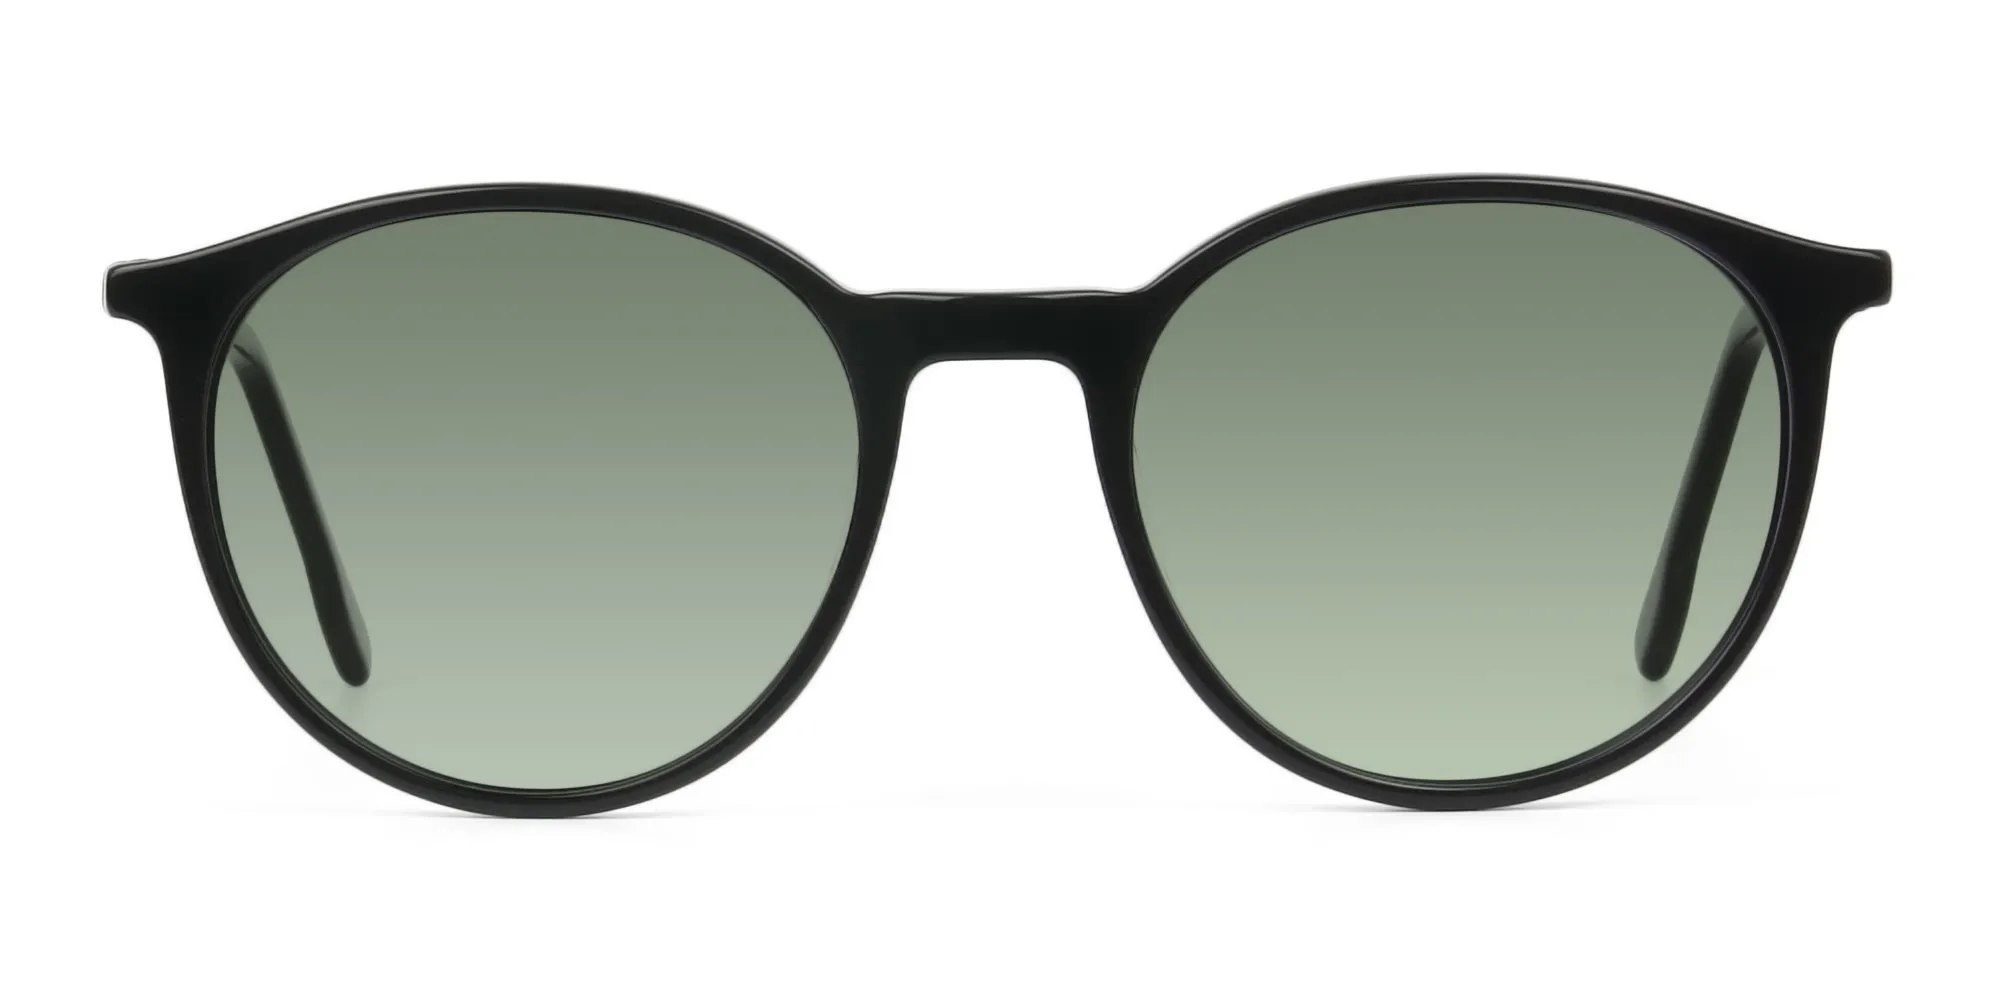 Dark-green-black-round-sunglasses - 2